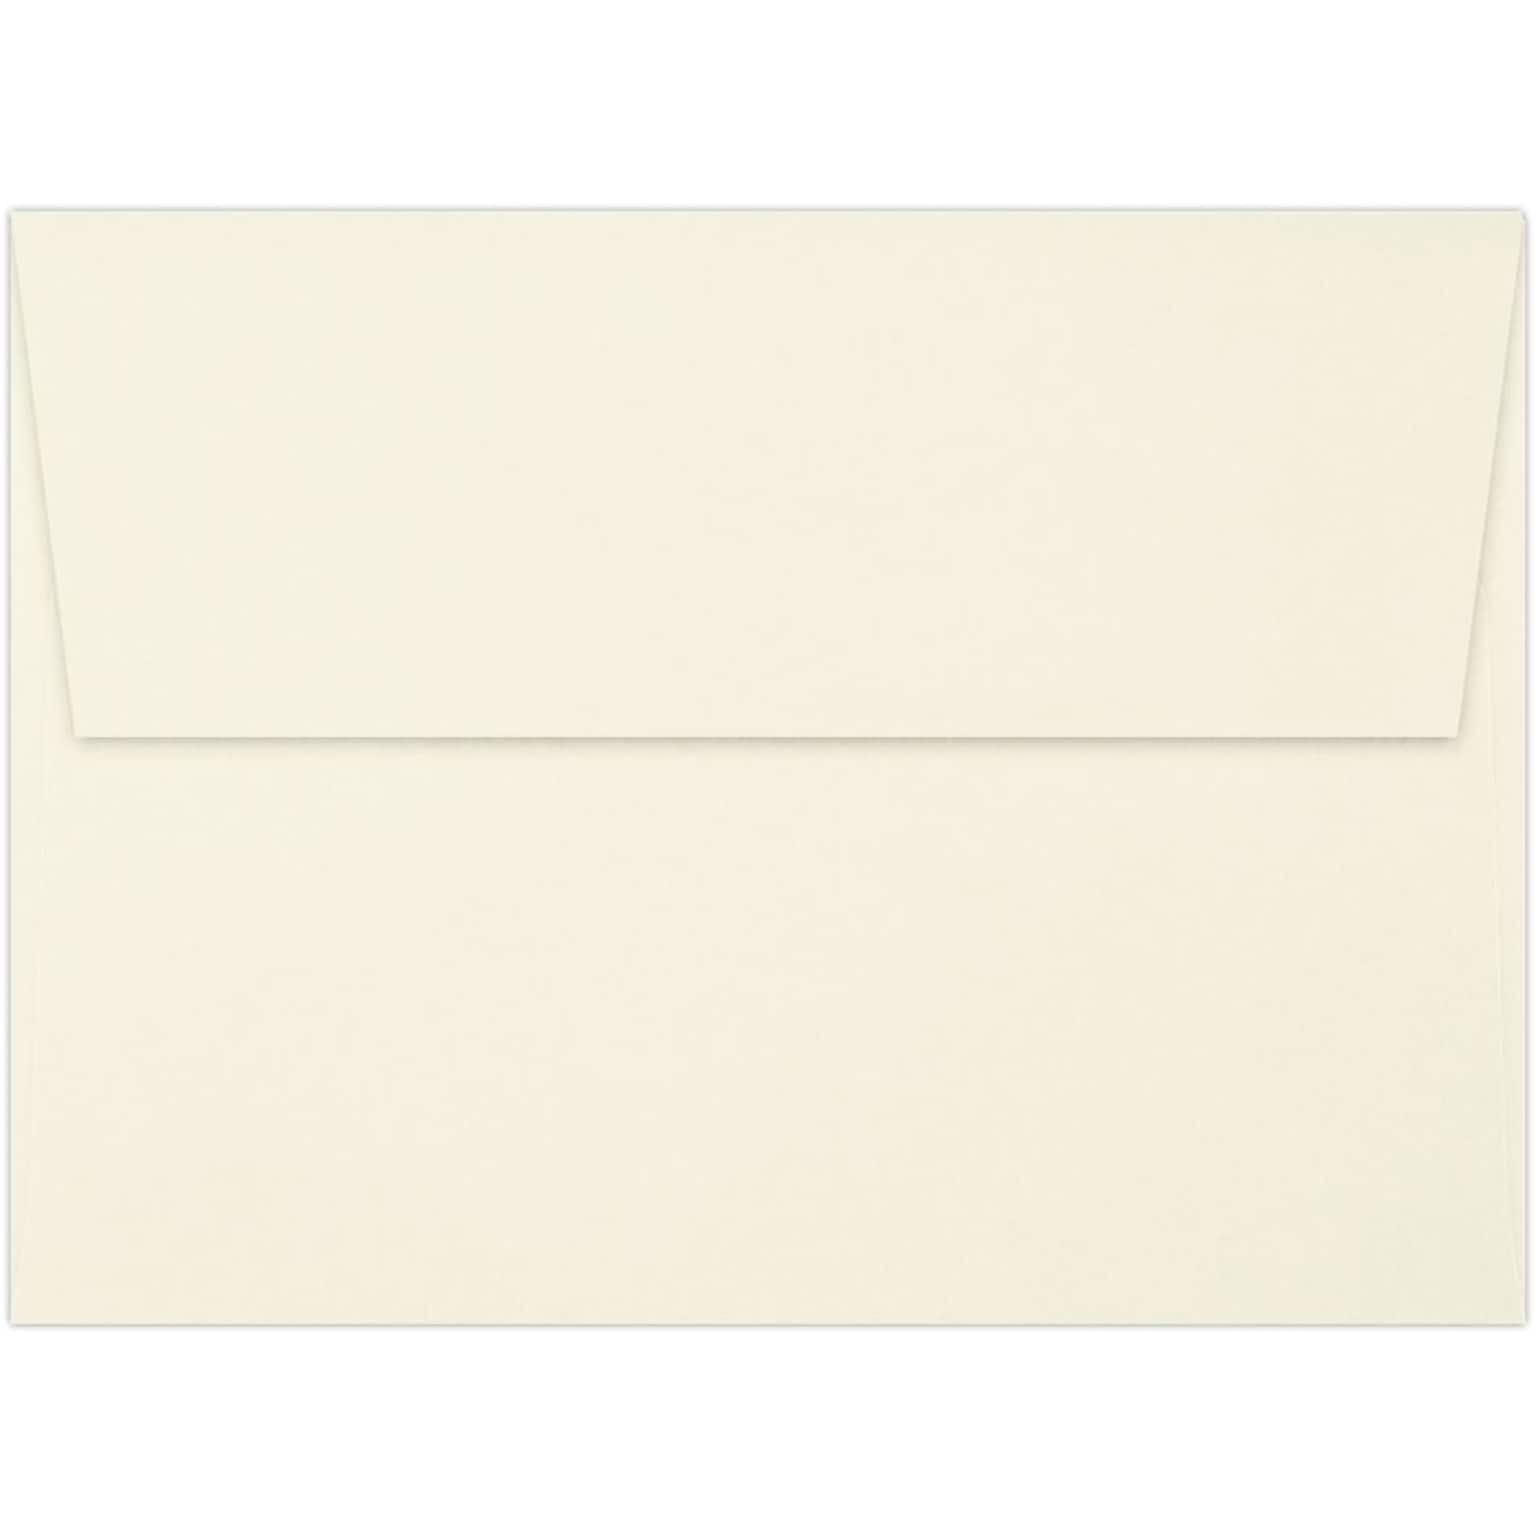 LUX A7 Invitation Envelopes (5 1/4 x 7 1/4) 250/Pack, 70lb. Classic Linen® Natural White (4880-70NWLI-250)